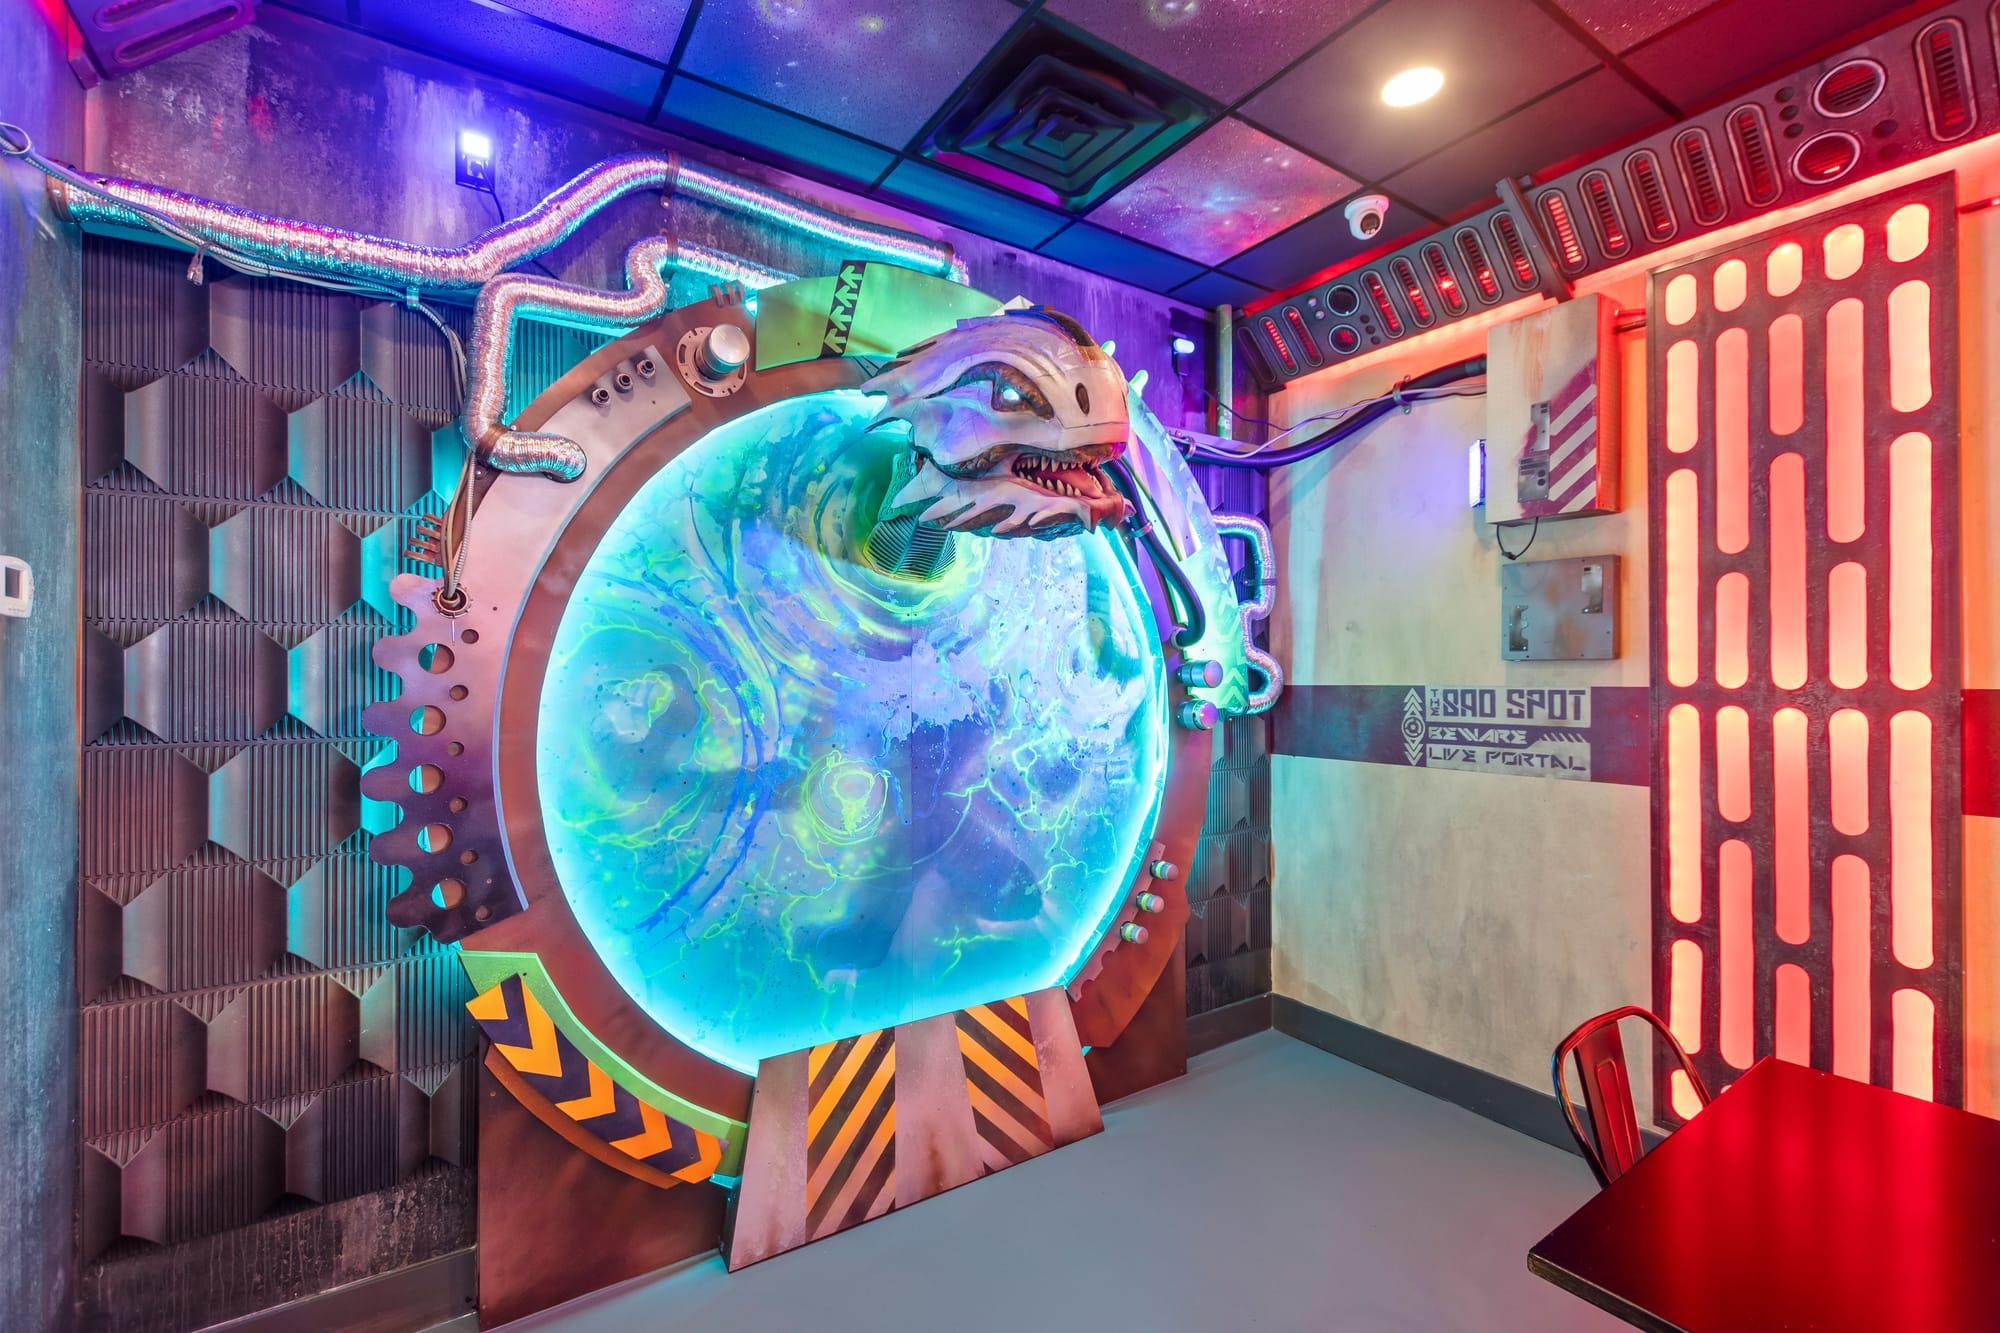 🚀🍔🌟 The Bao Spot's UFO Burgers & Galactic Eats - Unveiling Orlando's Latest Craze!